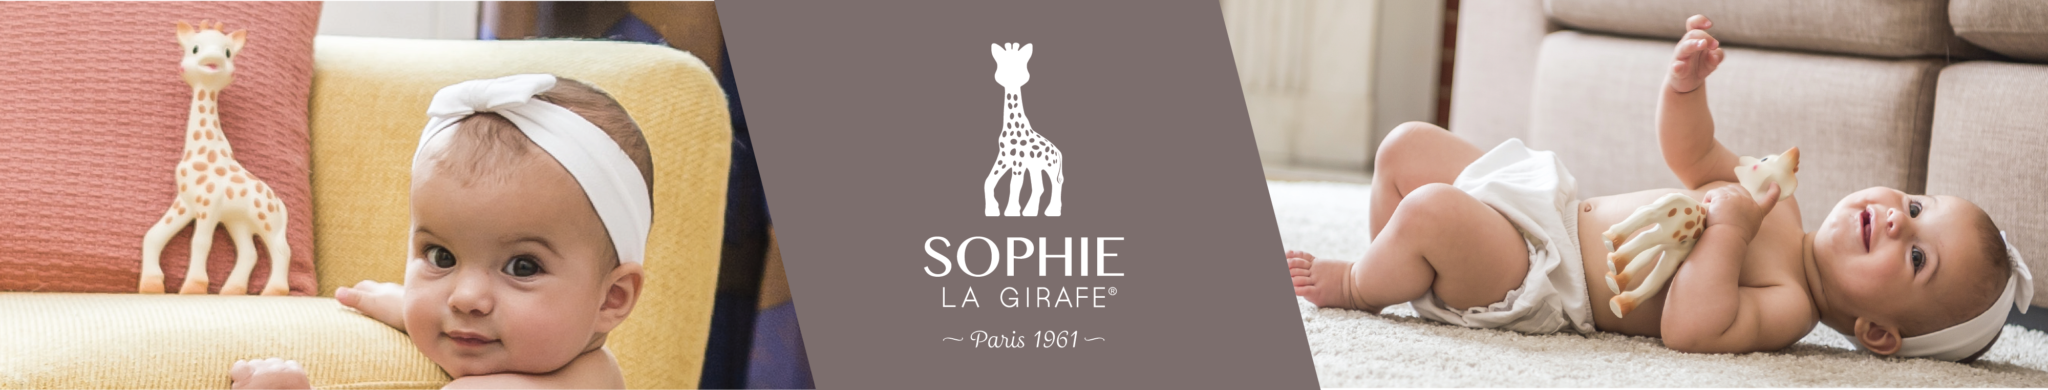 SOPHIE LA GIRAFE SELECTION!